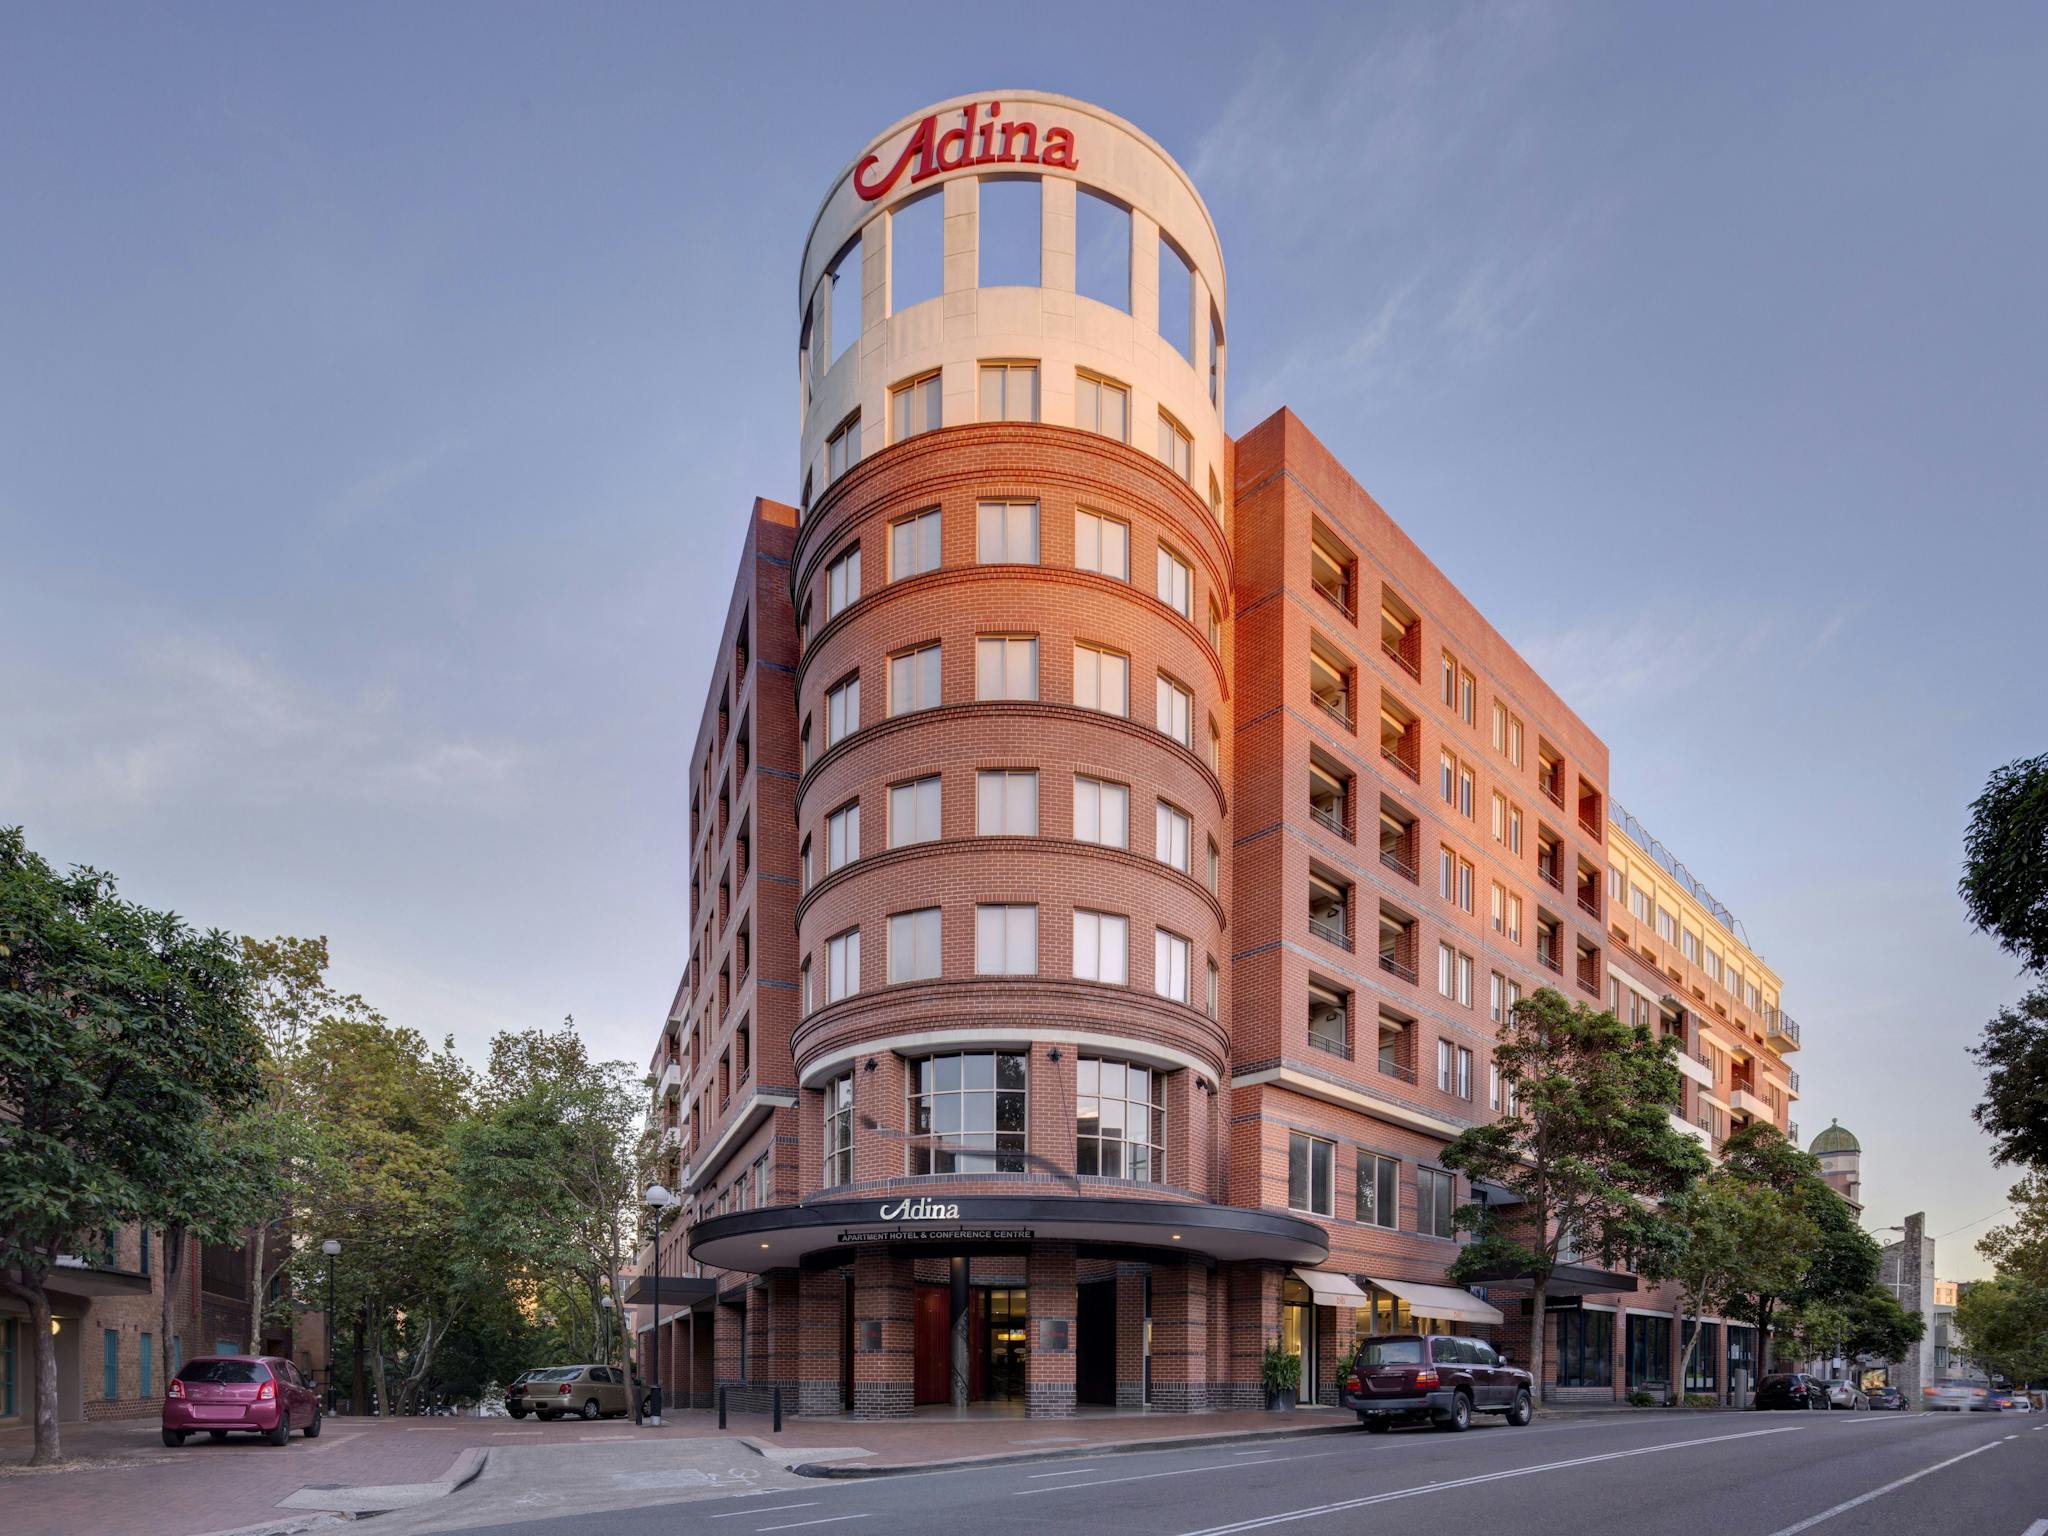 Modern Adina Apartment Hotel Sydney Cbd for Large Space